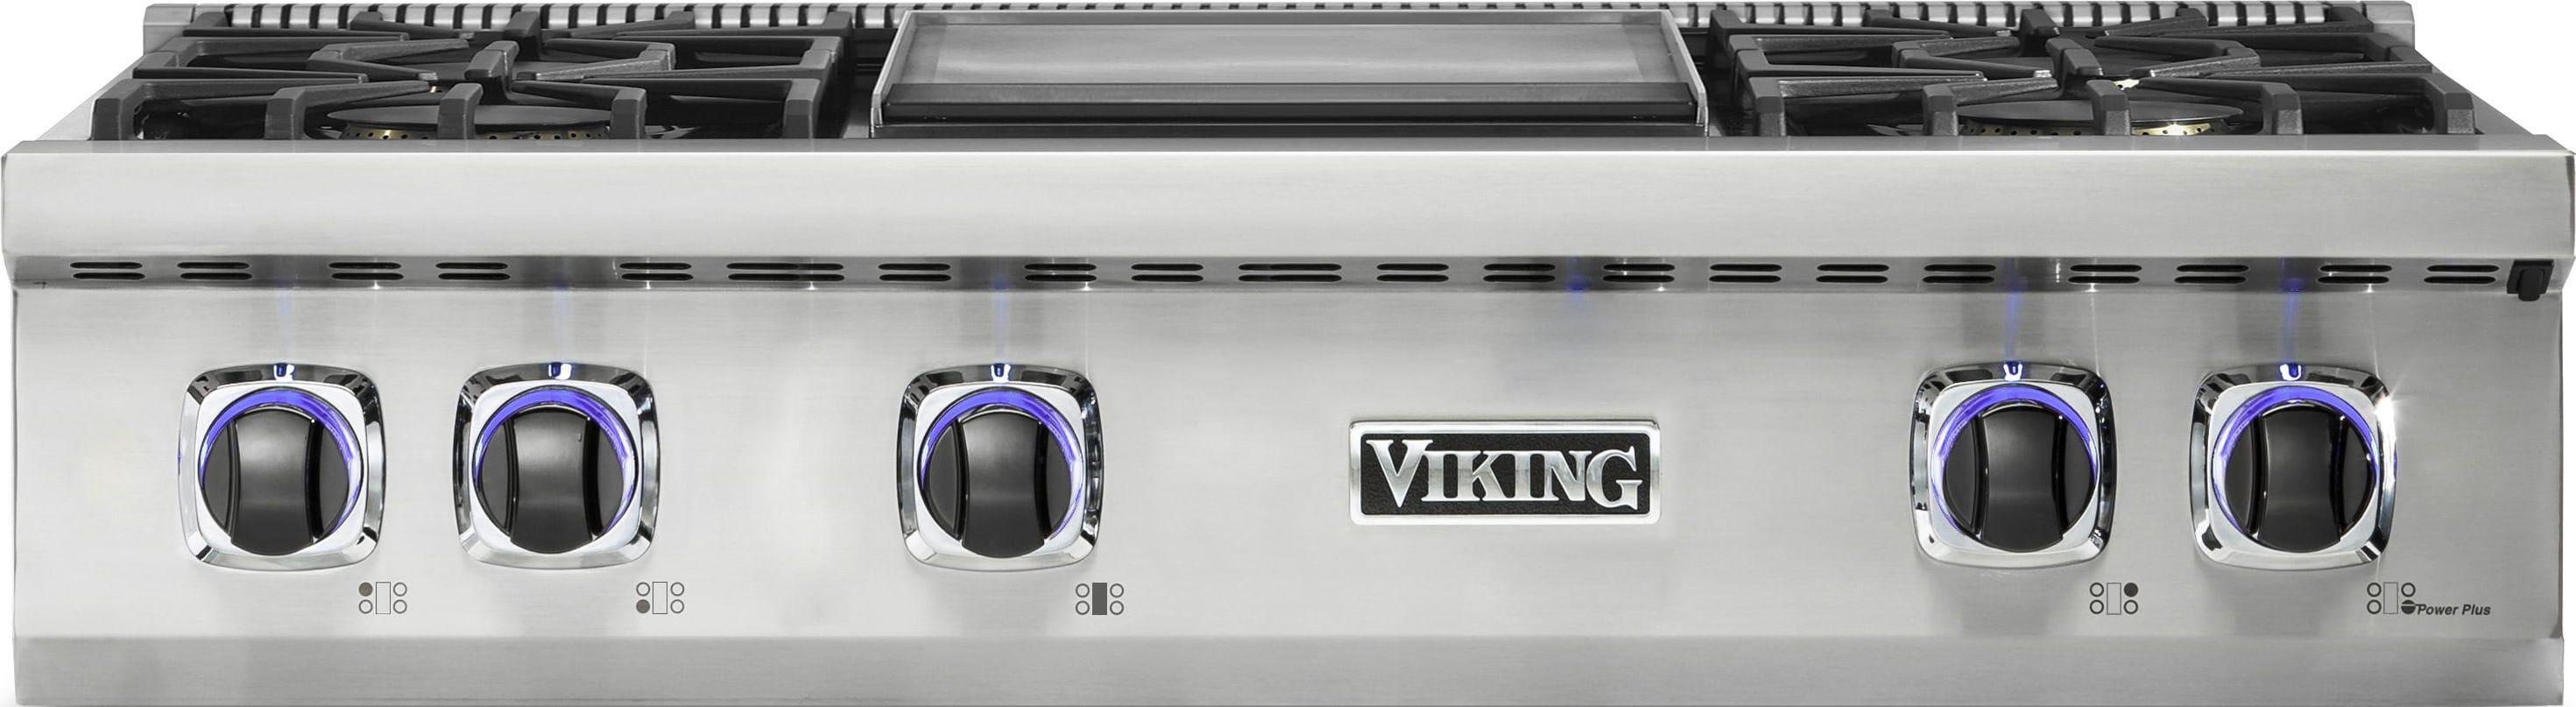 Viking VRT7364GSS